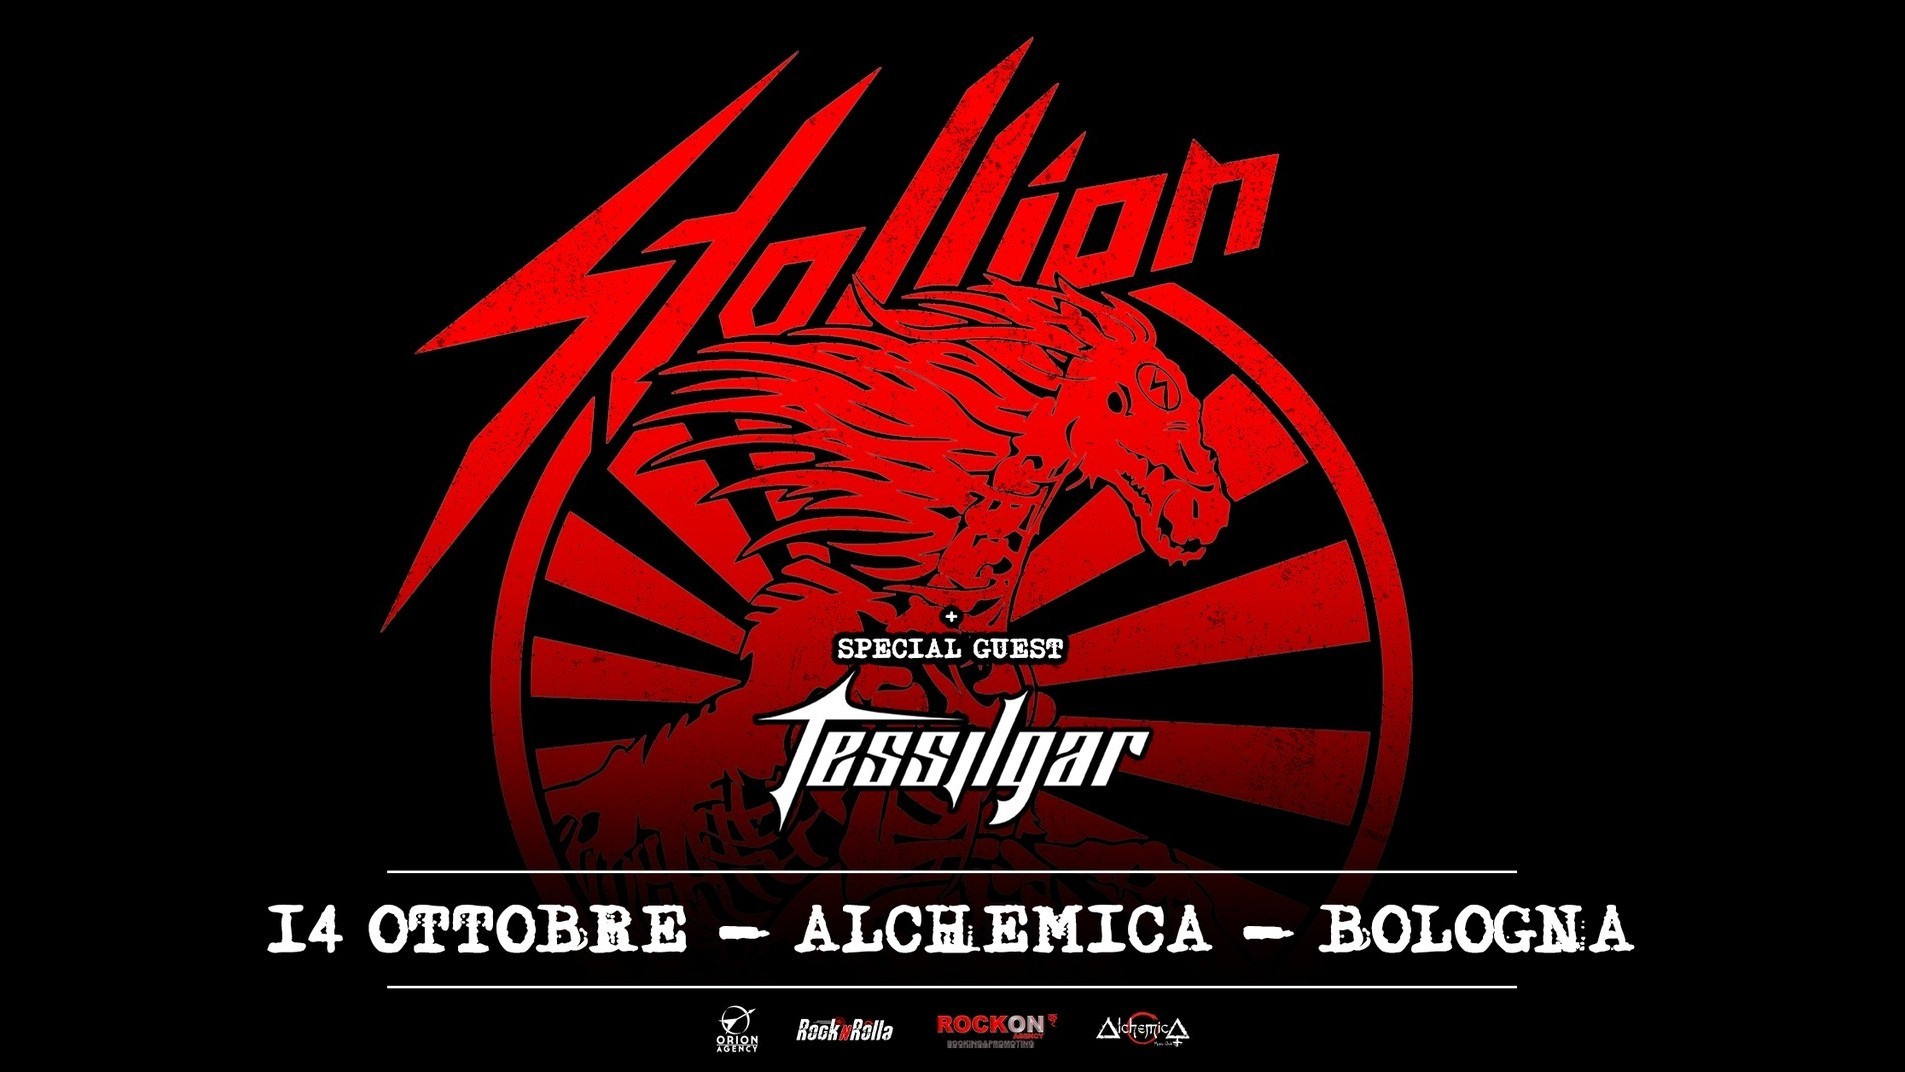 Stallion / Tessilgar / Motortrinken / Ares